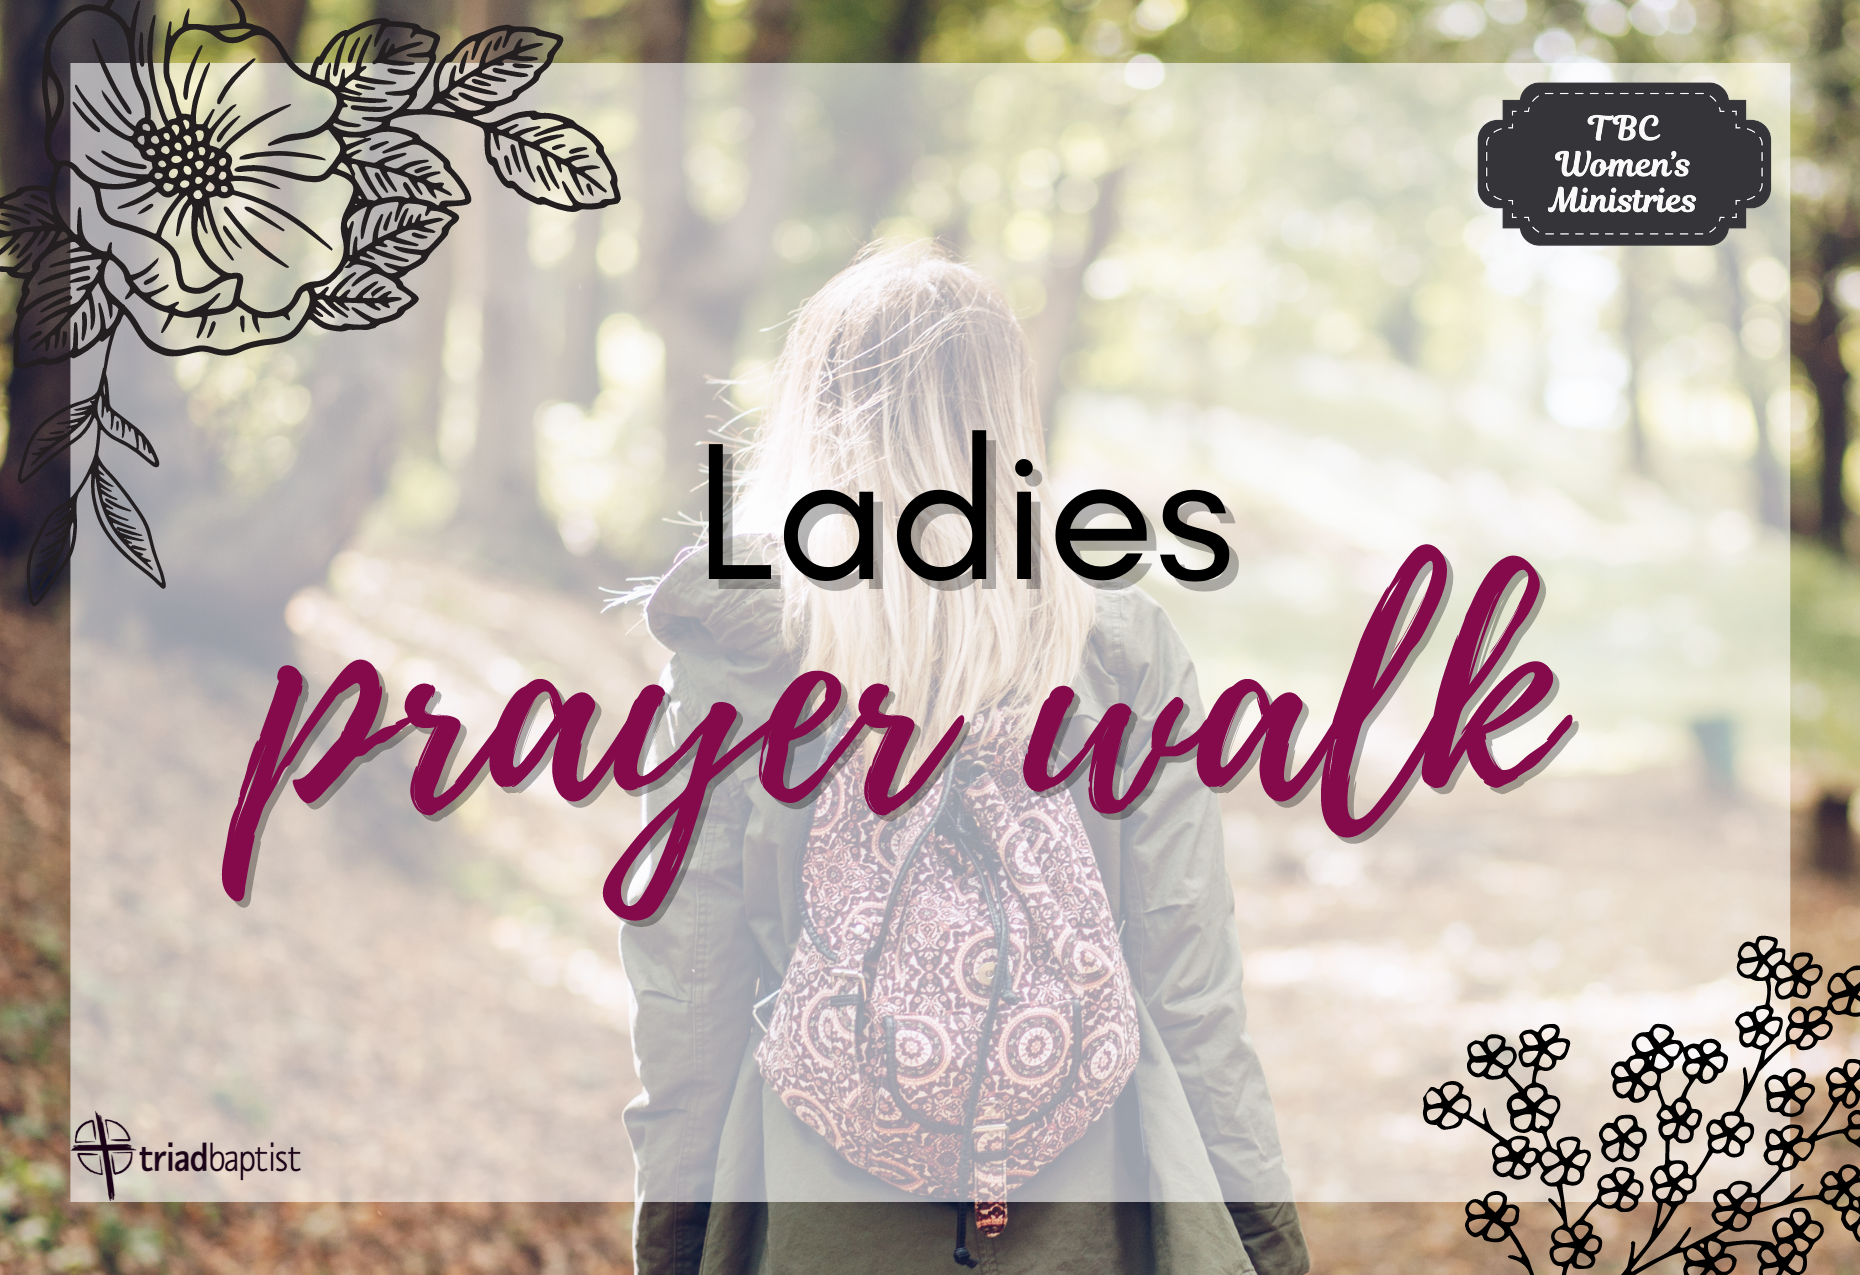 prayer walk image